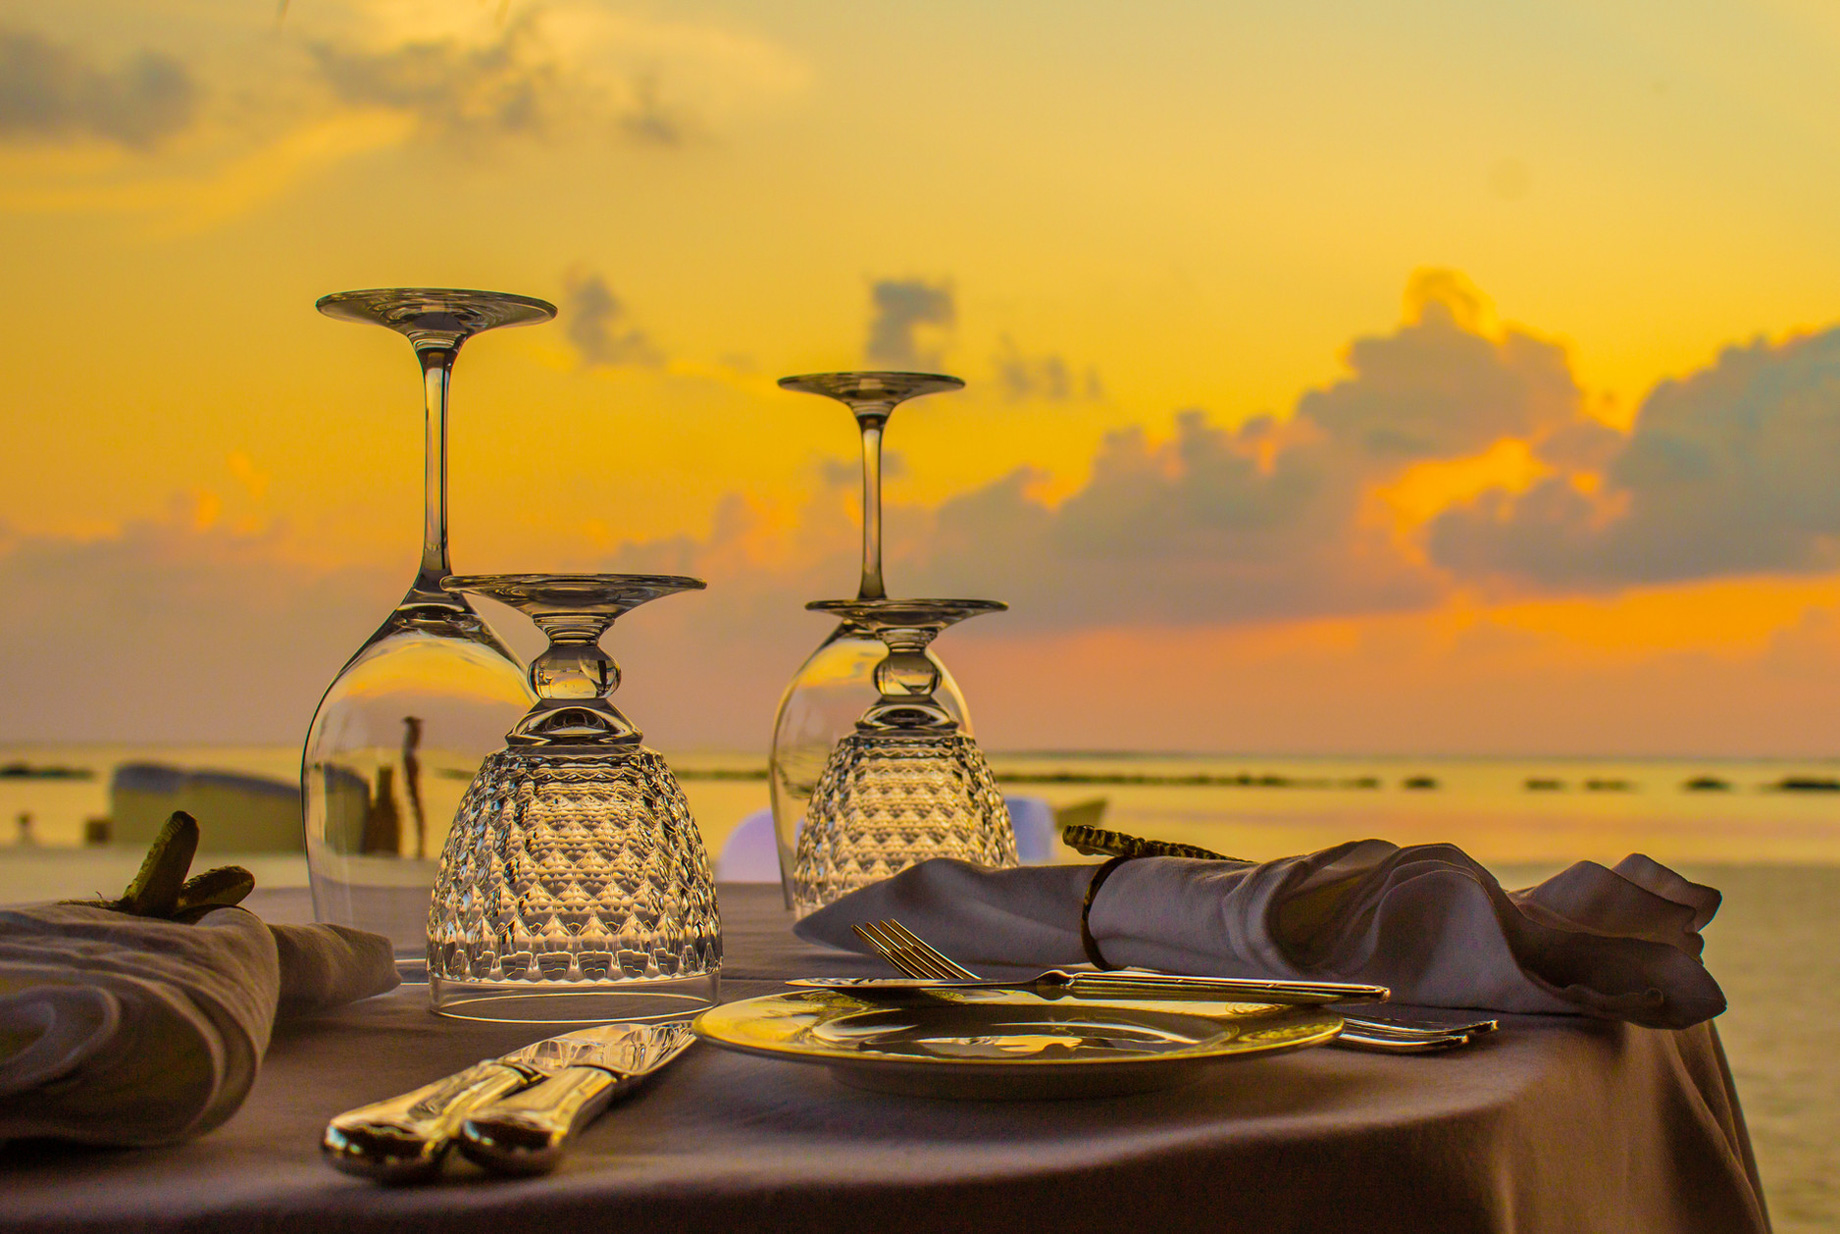 You & Me Maldives Resort – Uthurumaafaru, Raa Atoll, Maldives – The Sand Restaurant Sunset View